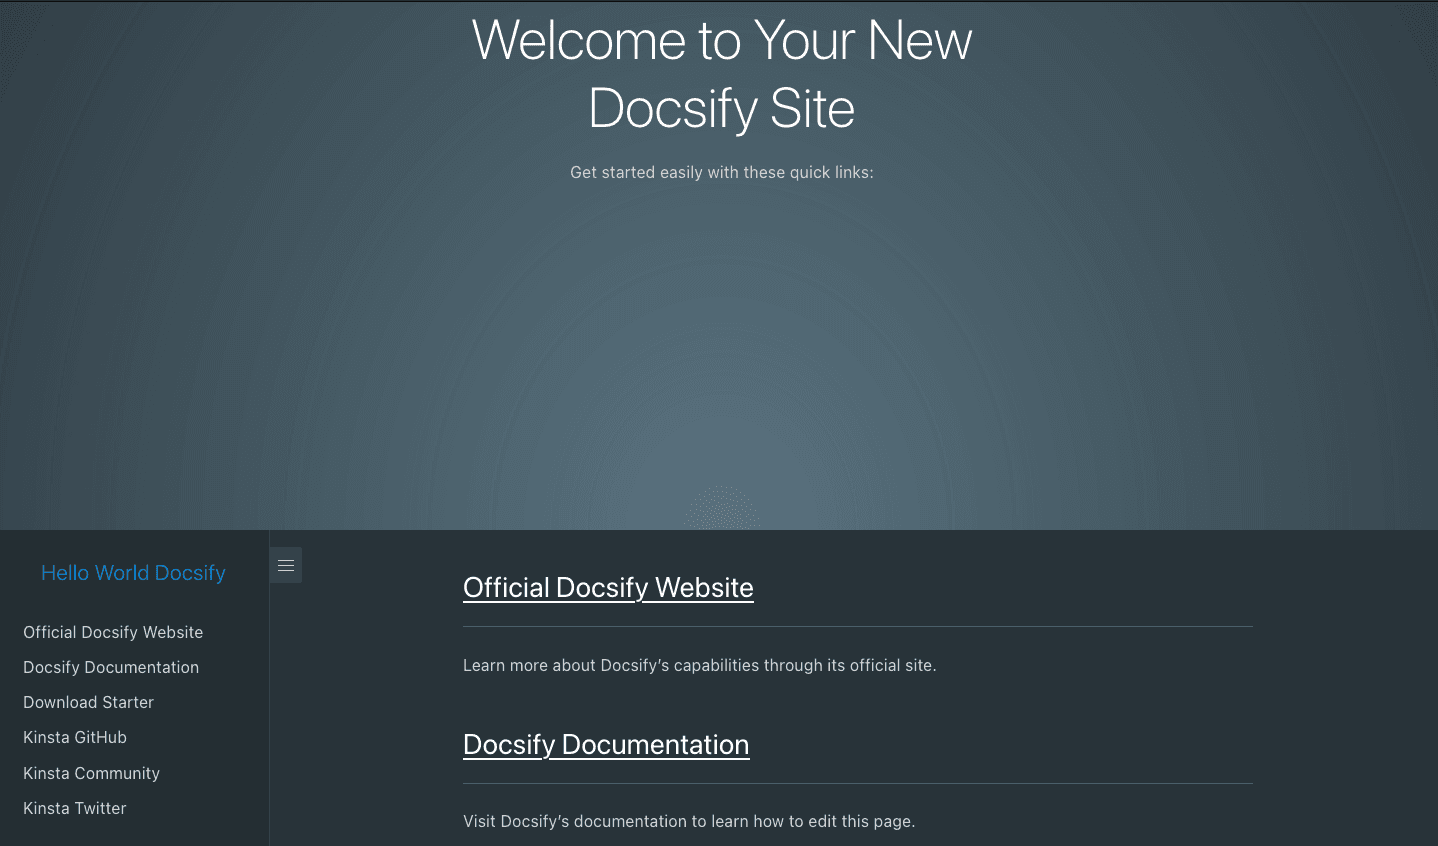 Docsify welkomstpagina na succesvolle deployment van Docsify.